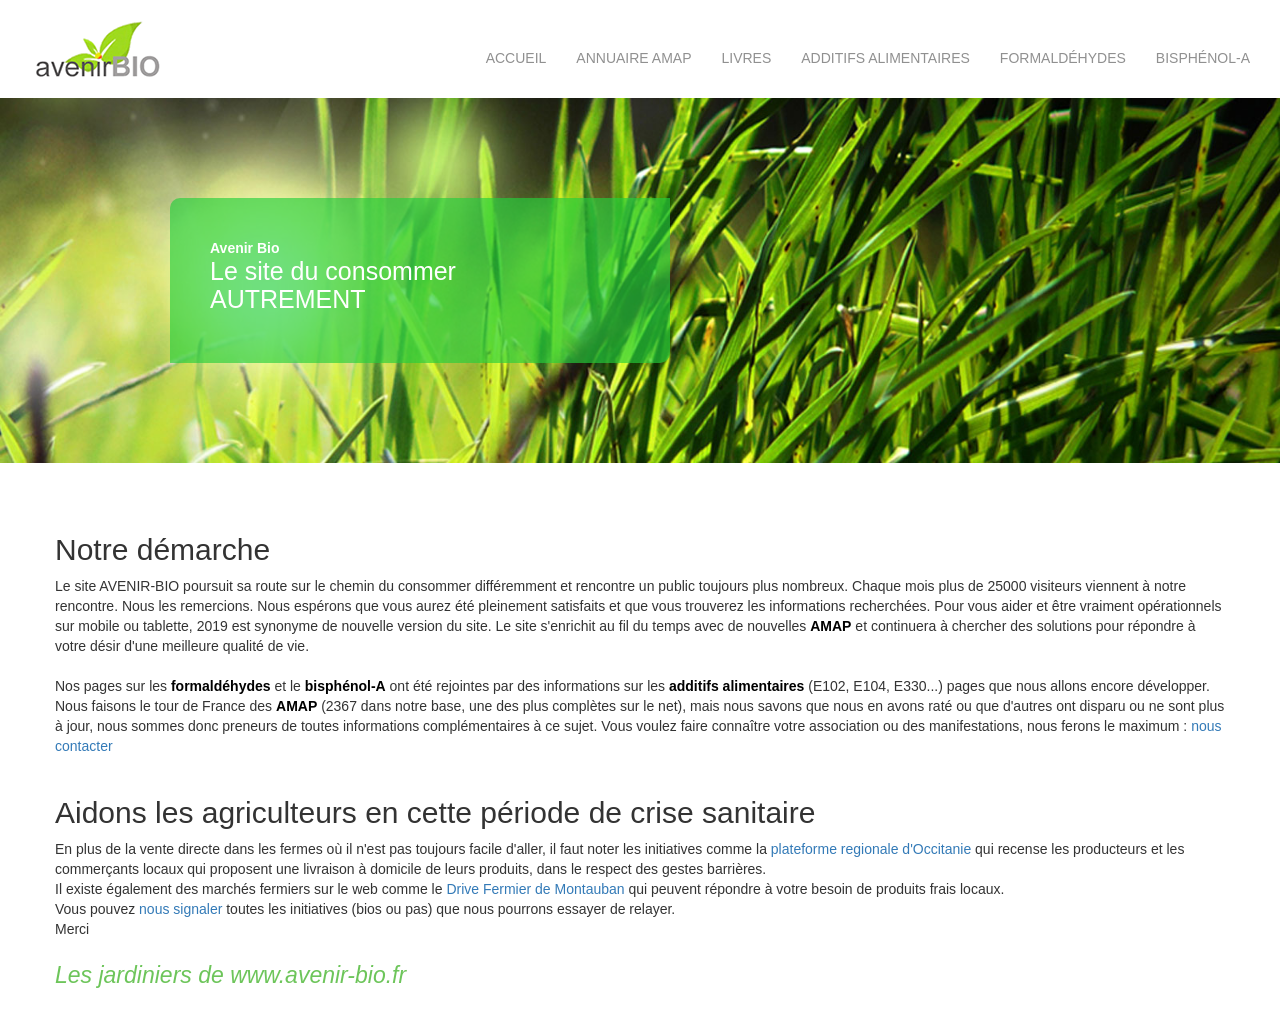 www.avenir-bio.fr